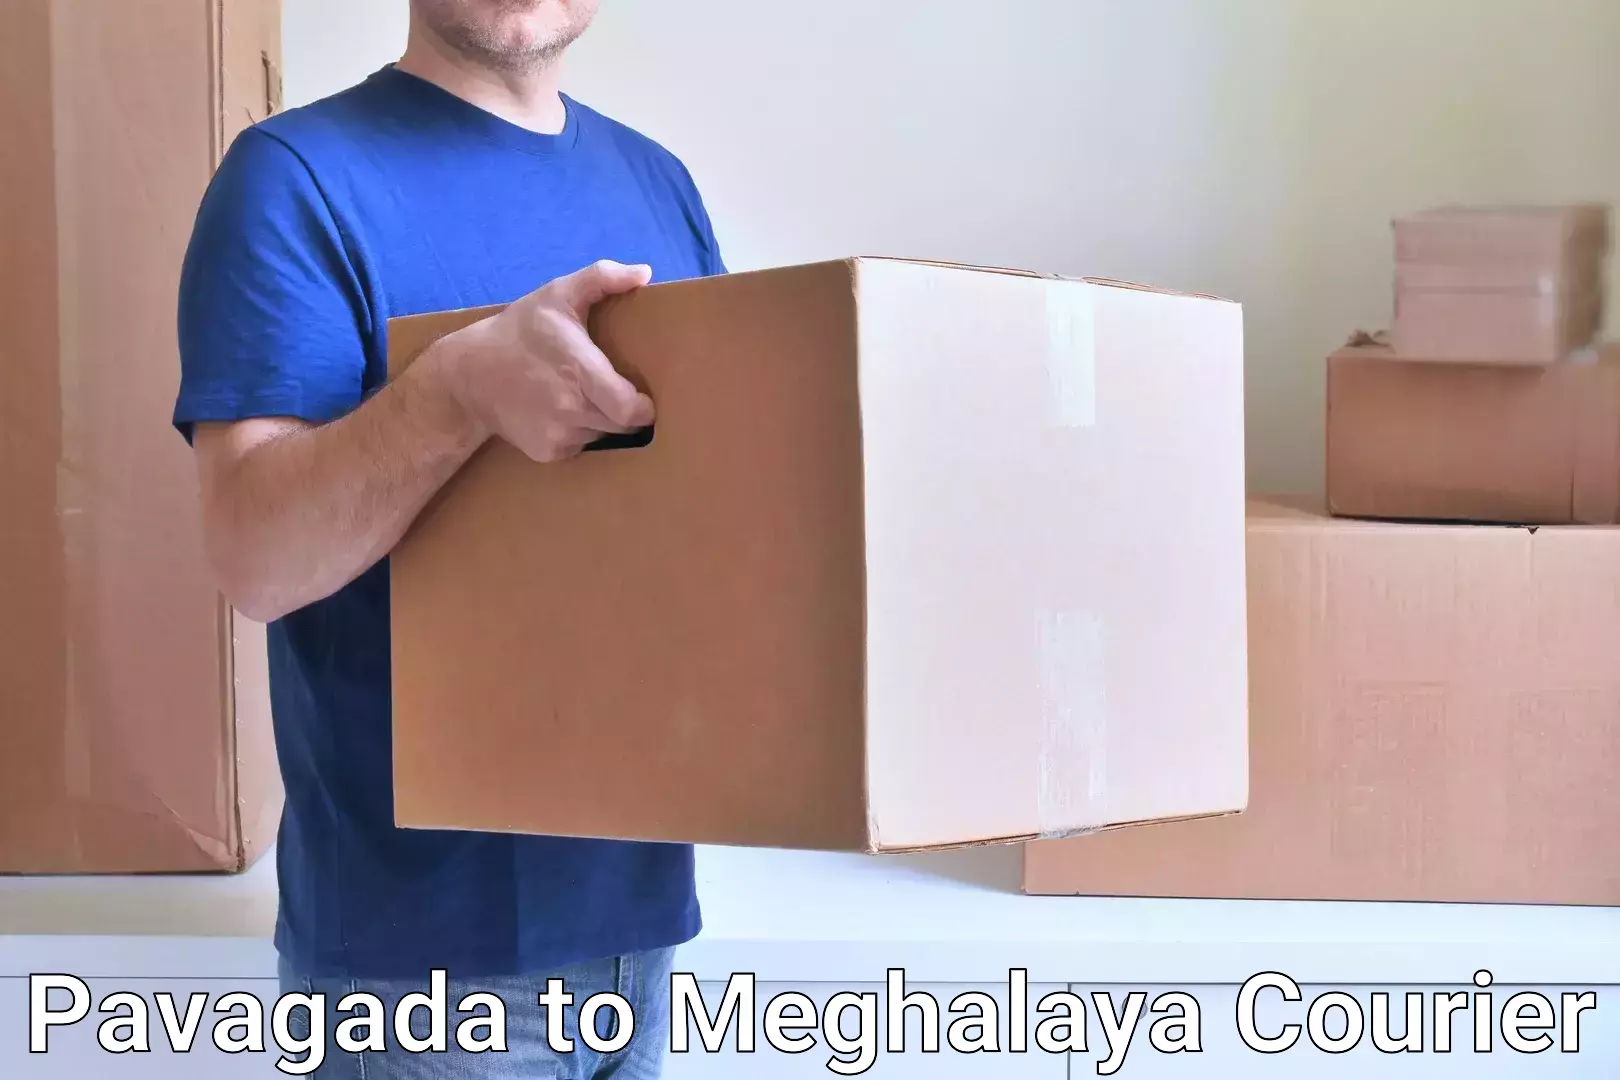 Advanced tracking systems Pavagada to Meghalaya